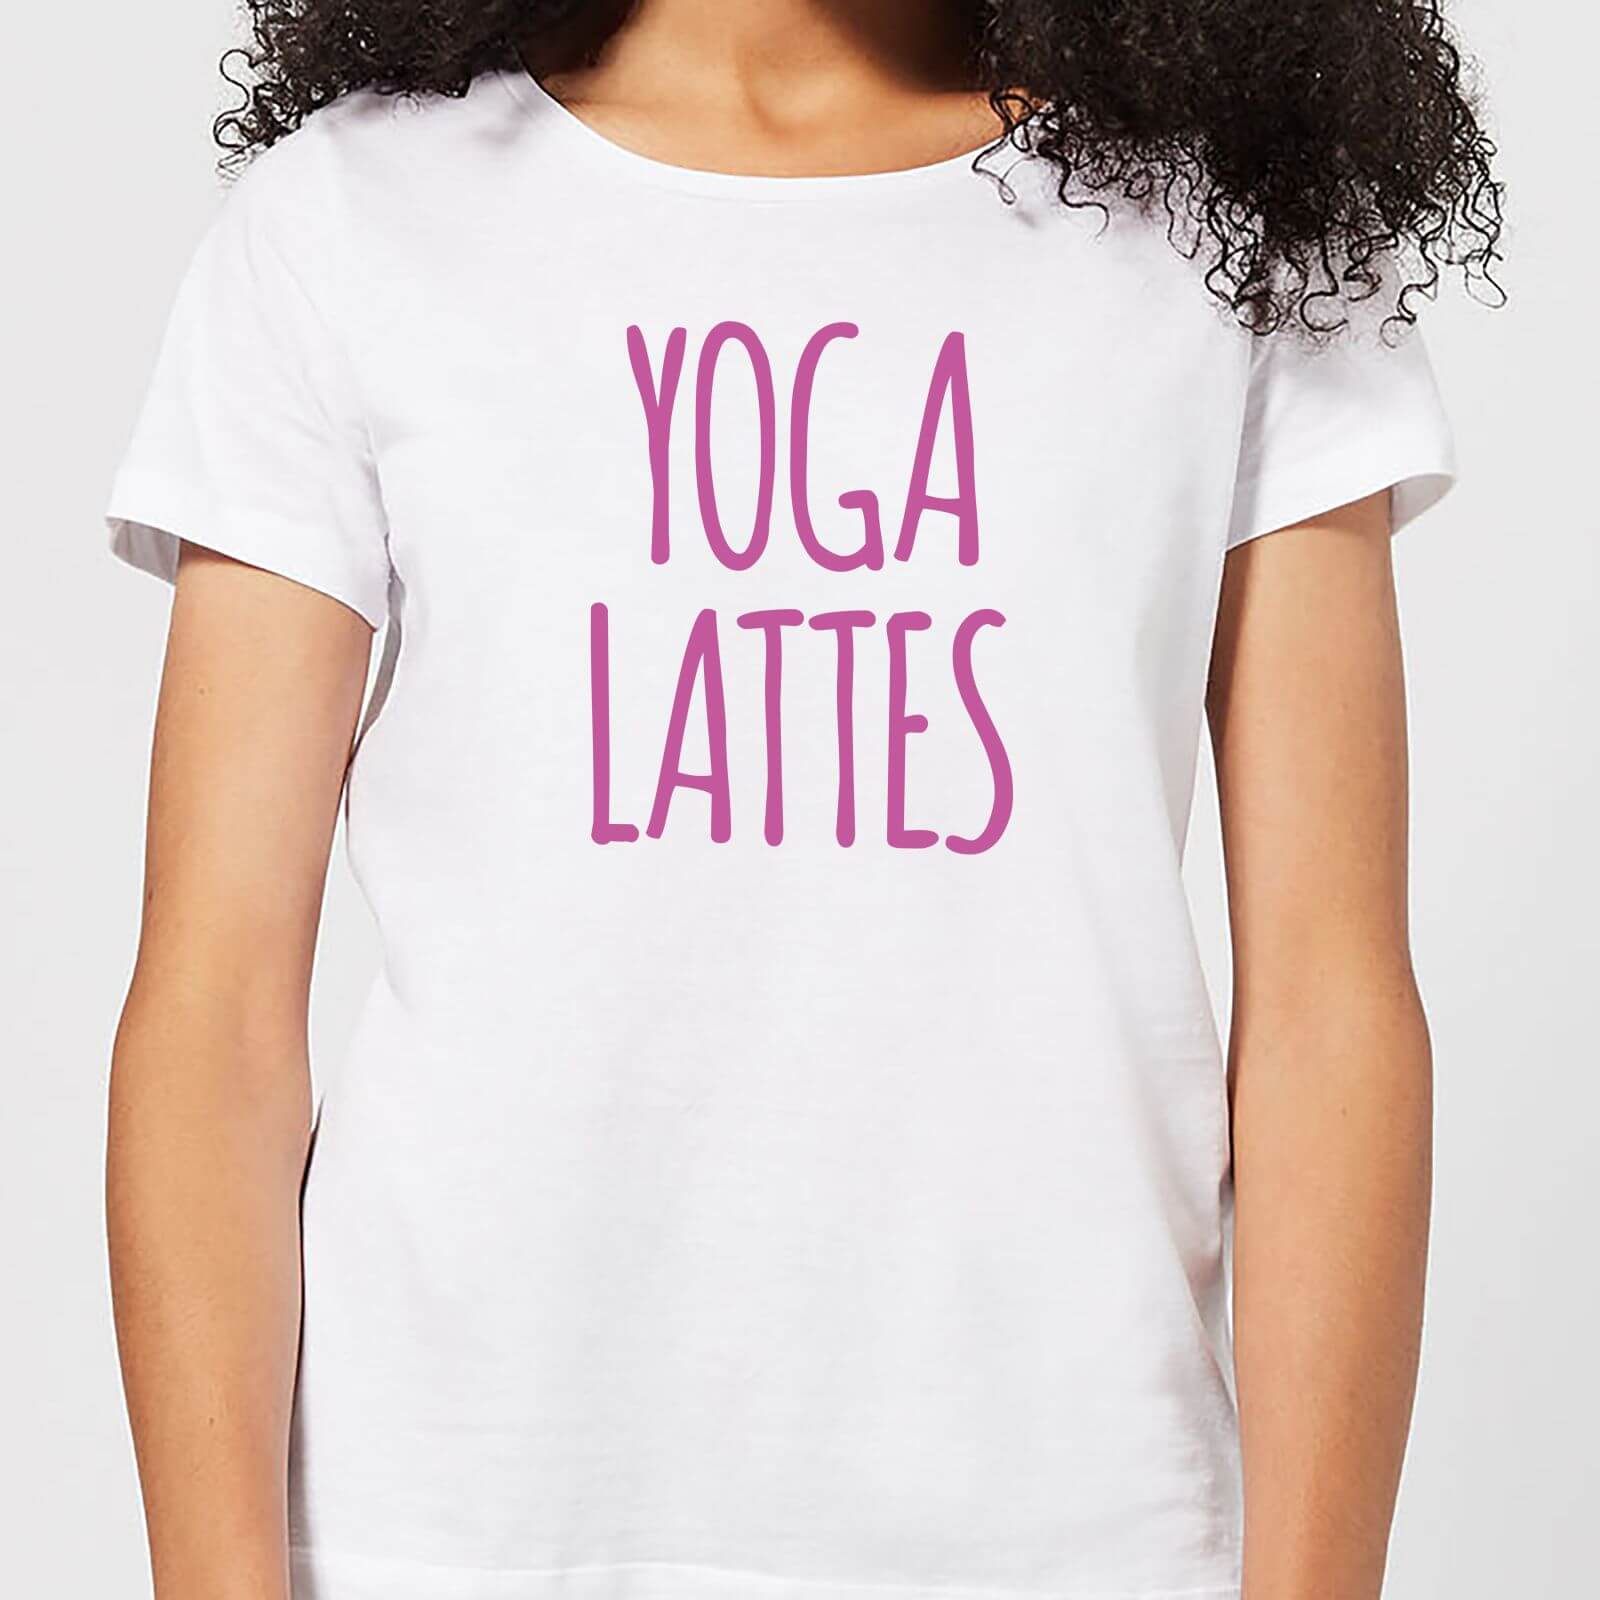 Fitness and Loungewear Yoga Lattes Women's T-Shirt - White - 5XL - White